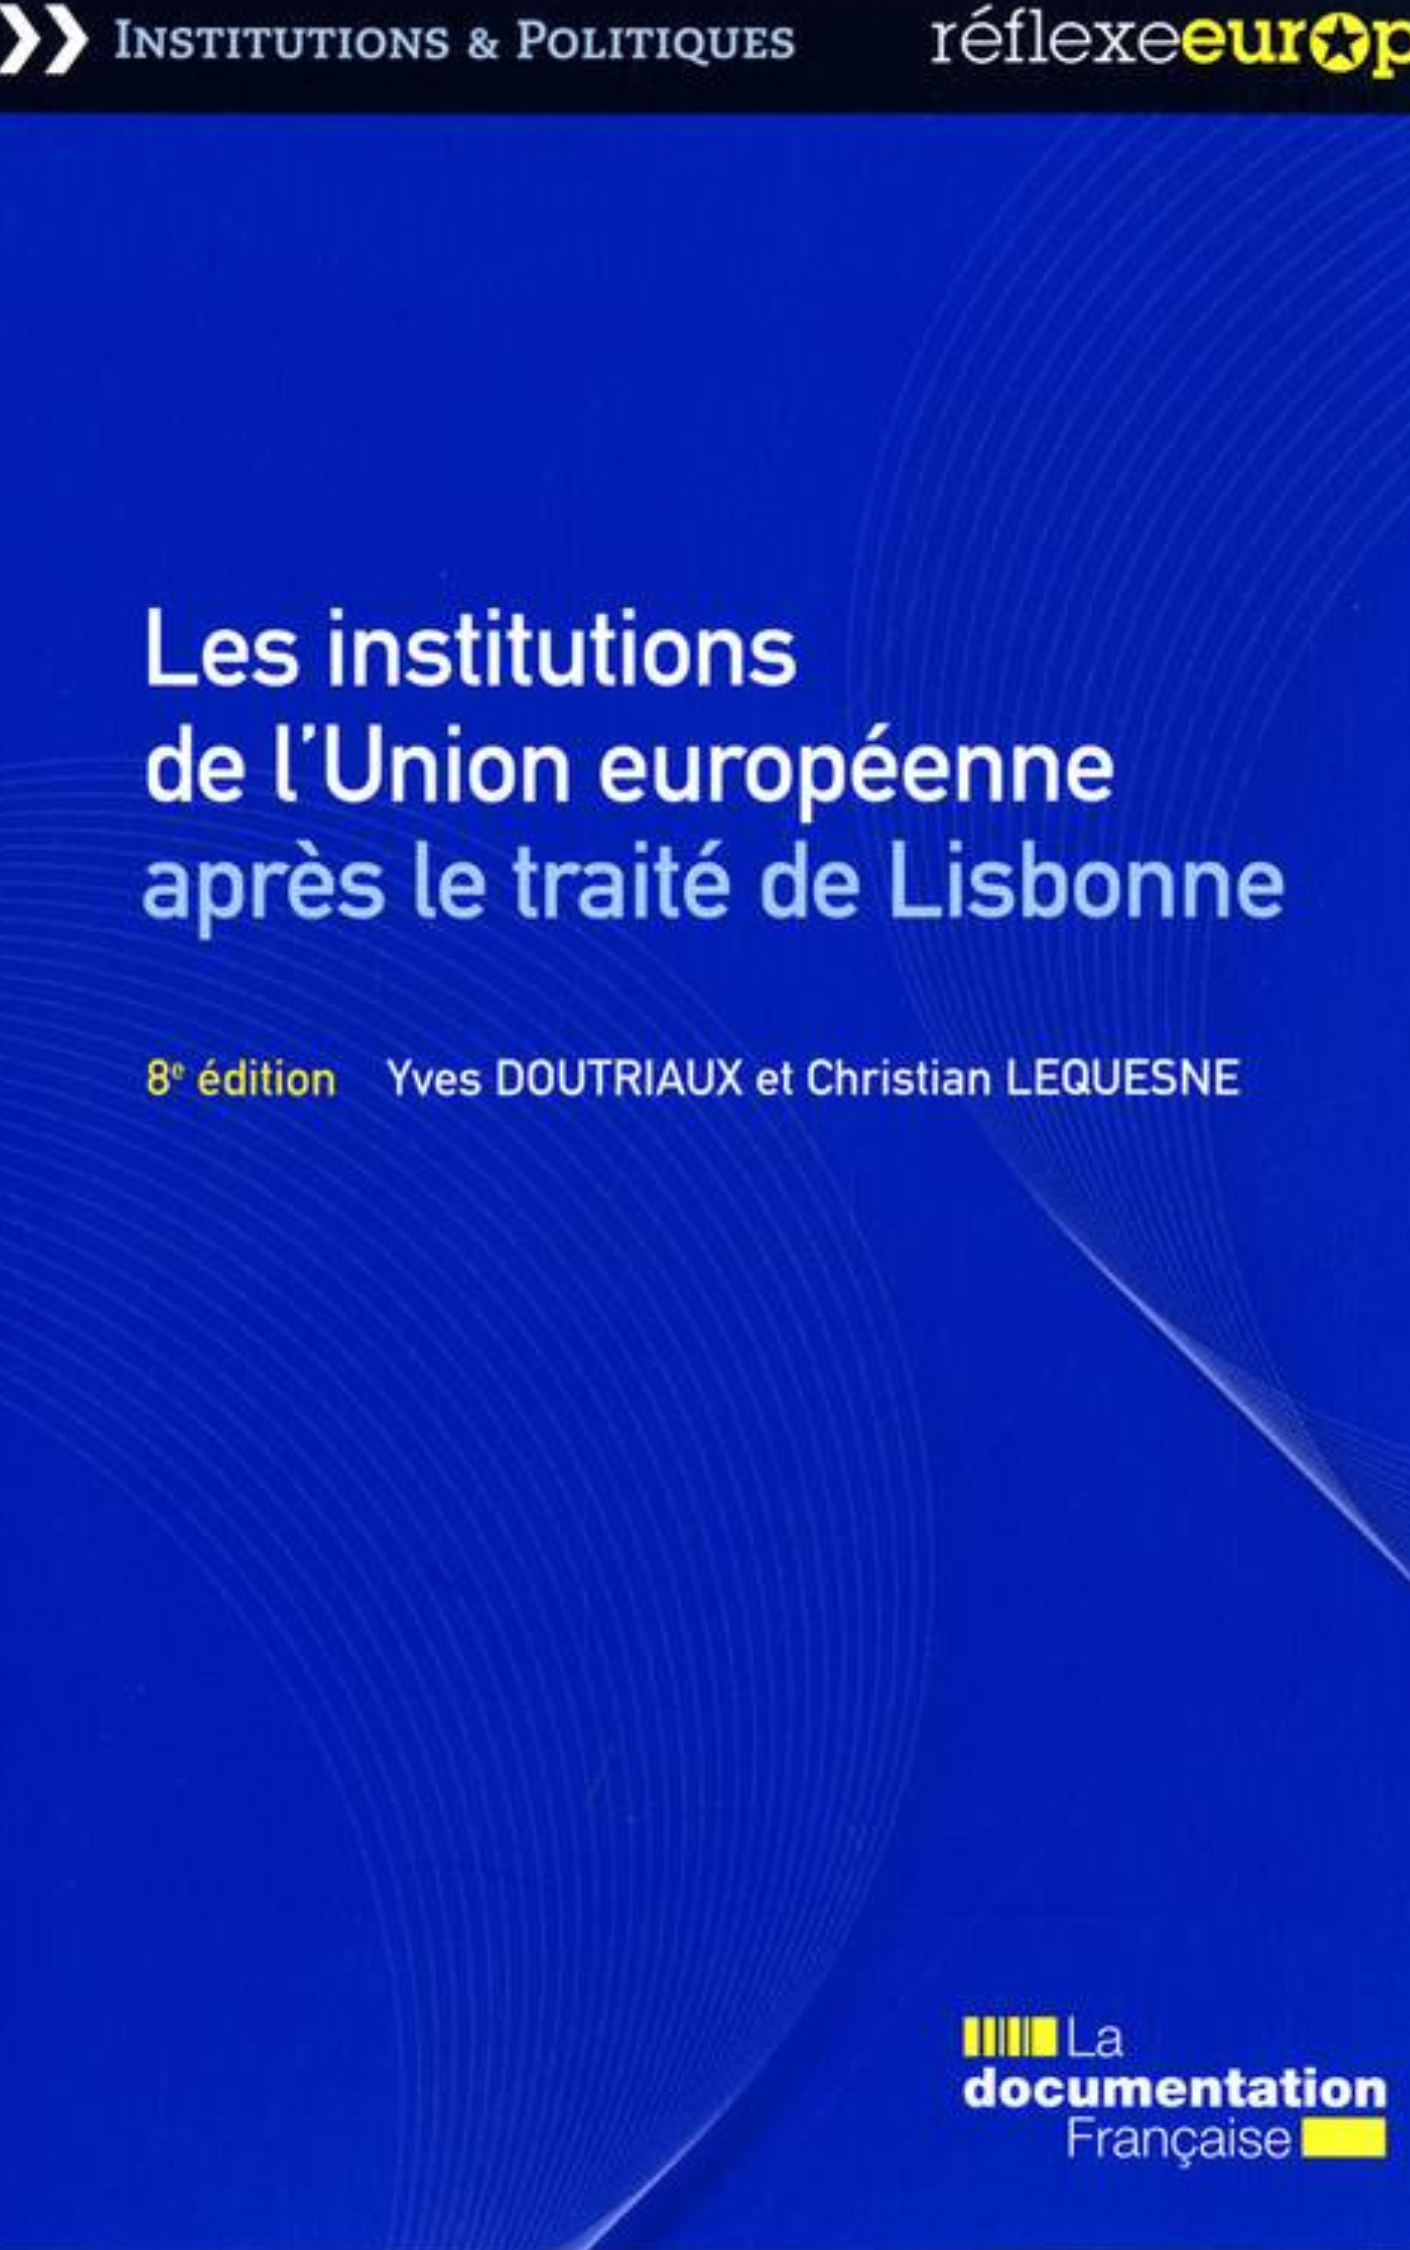 Christian Lequesne, Yves Doutriaux